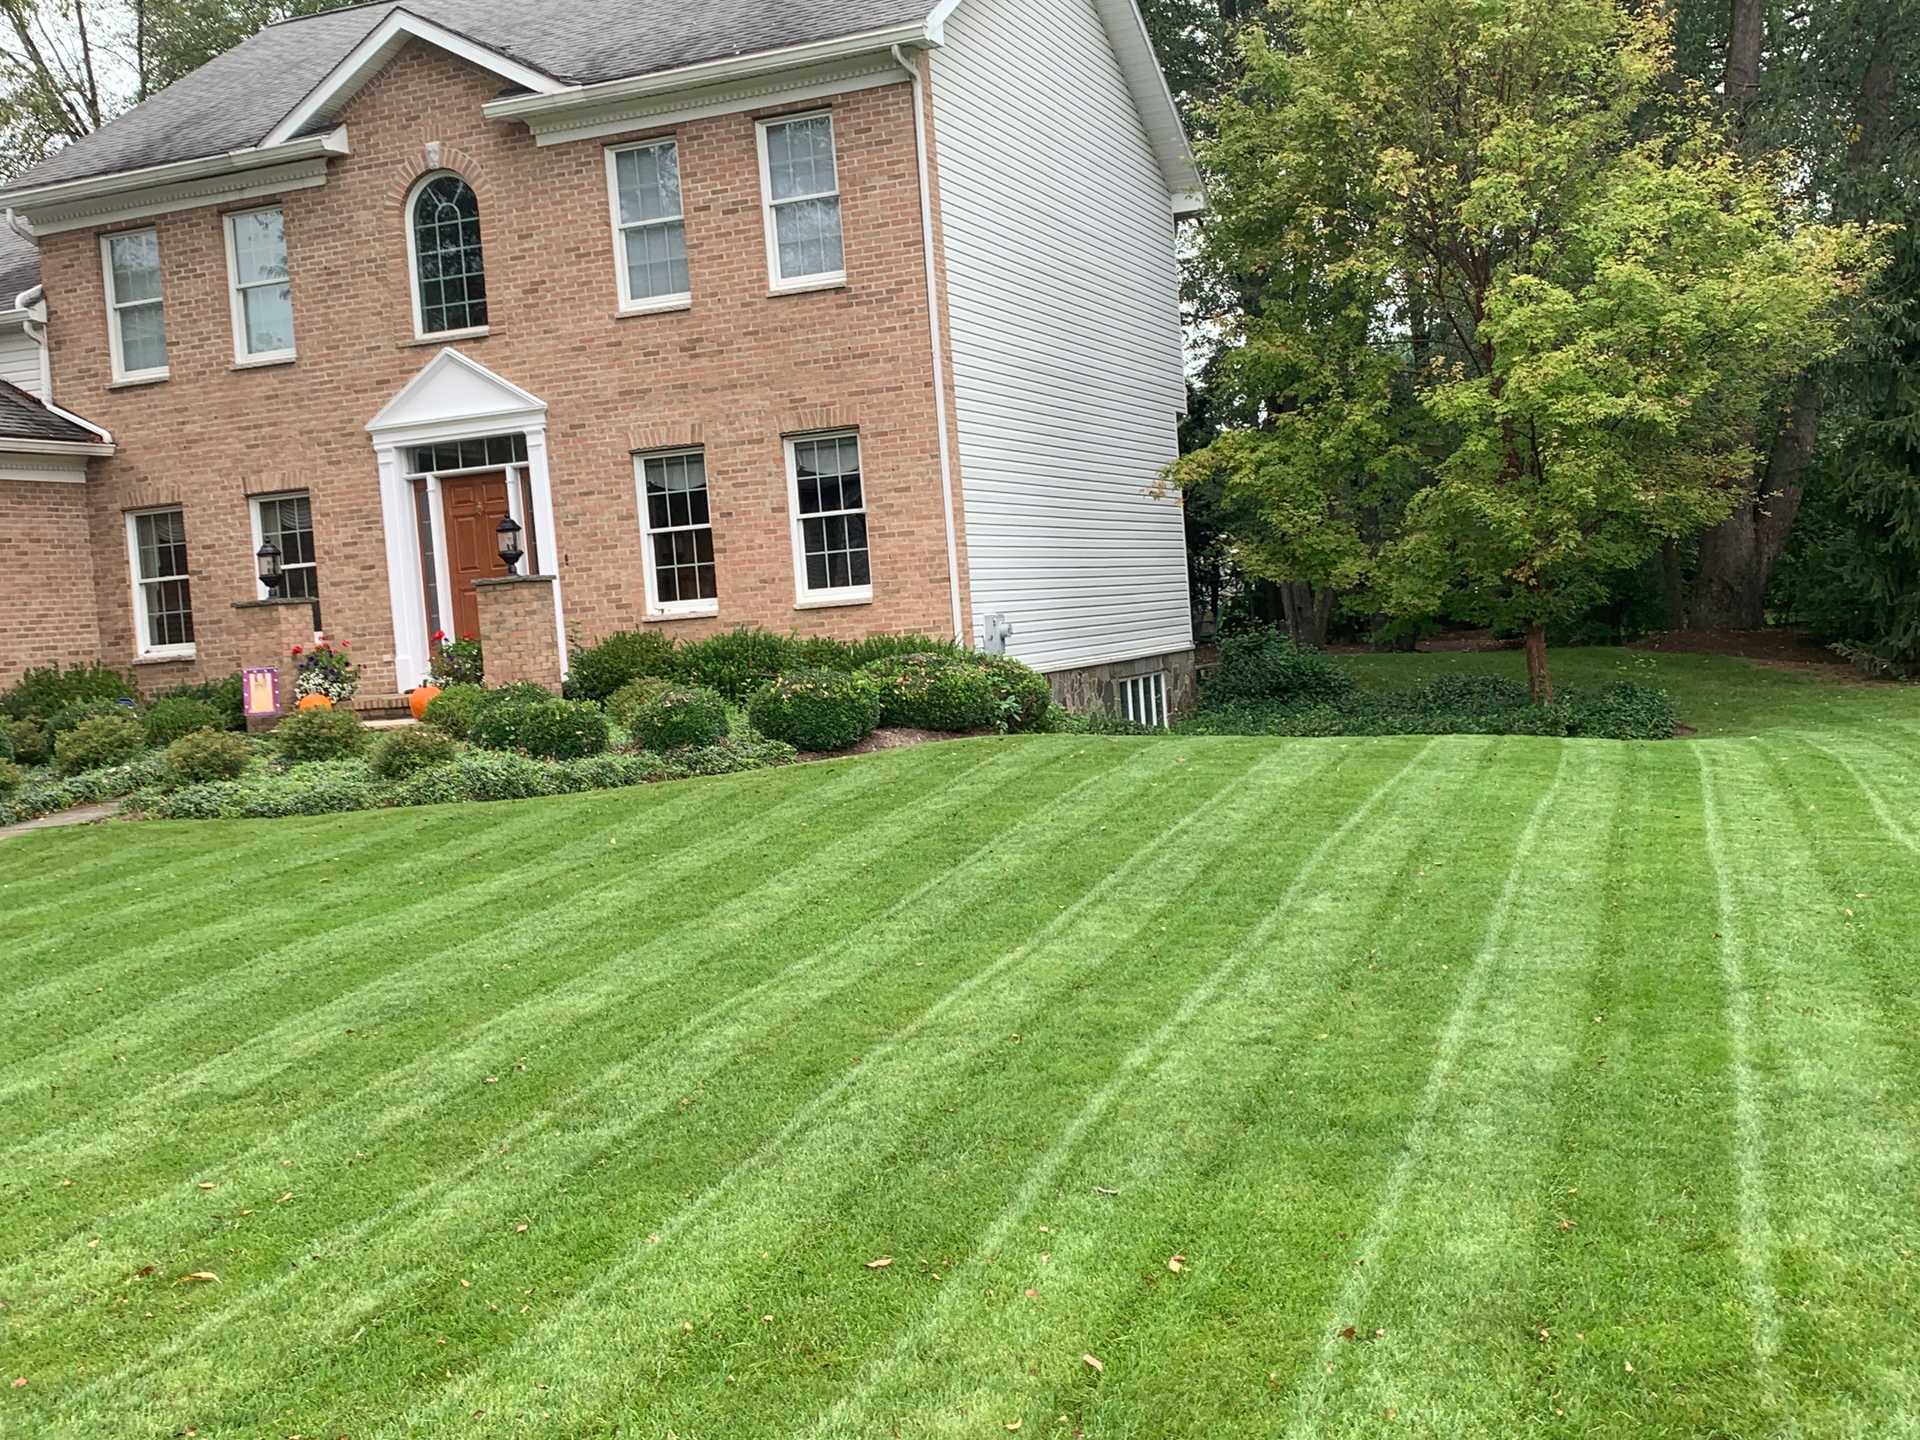 Quality Cuts Lawncare cut grass